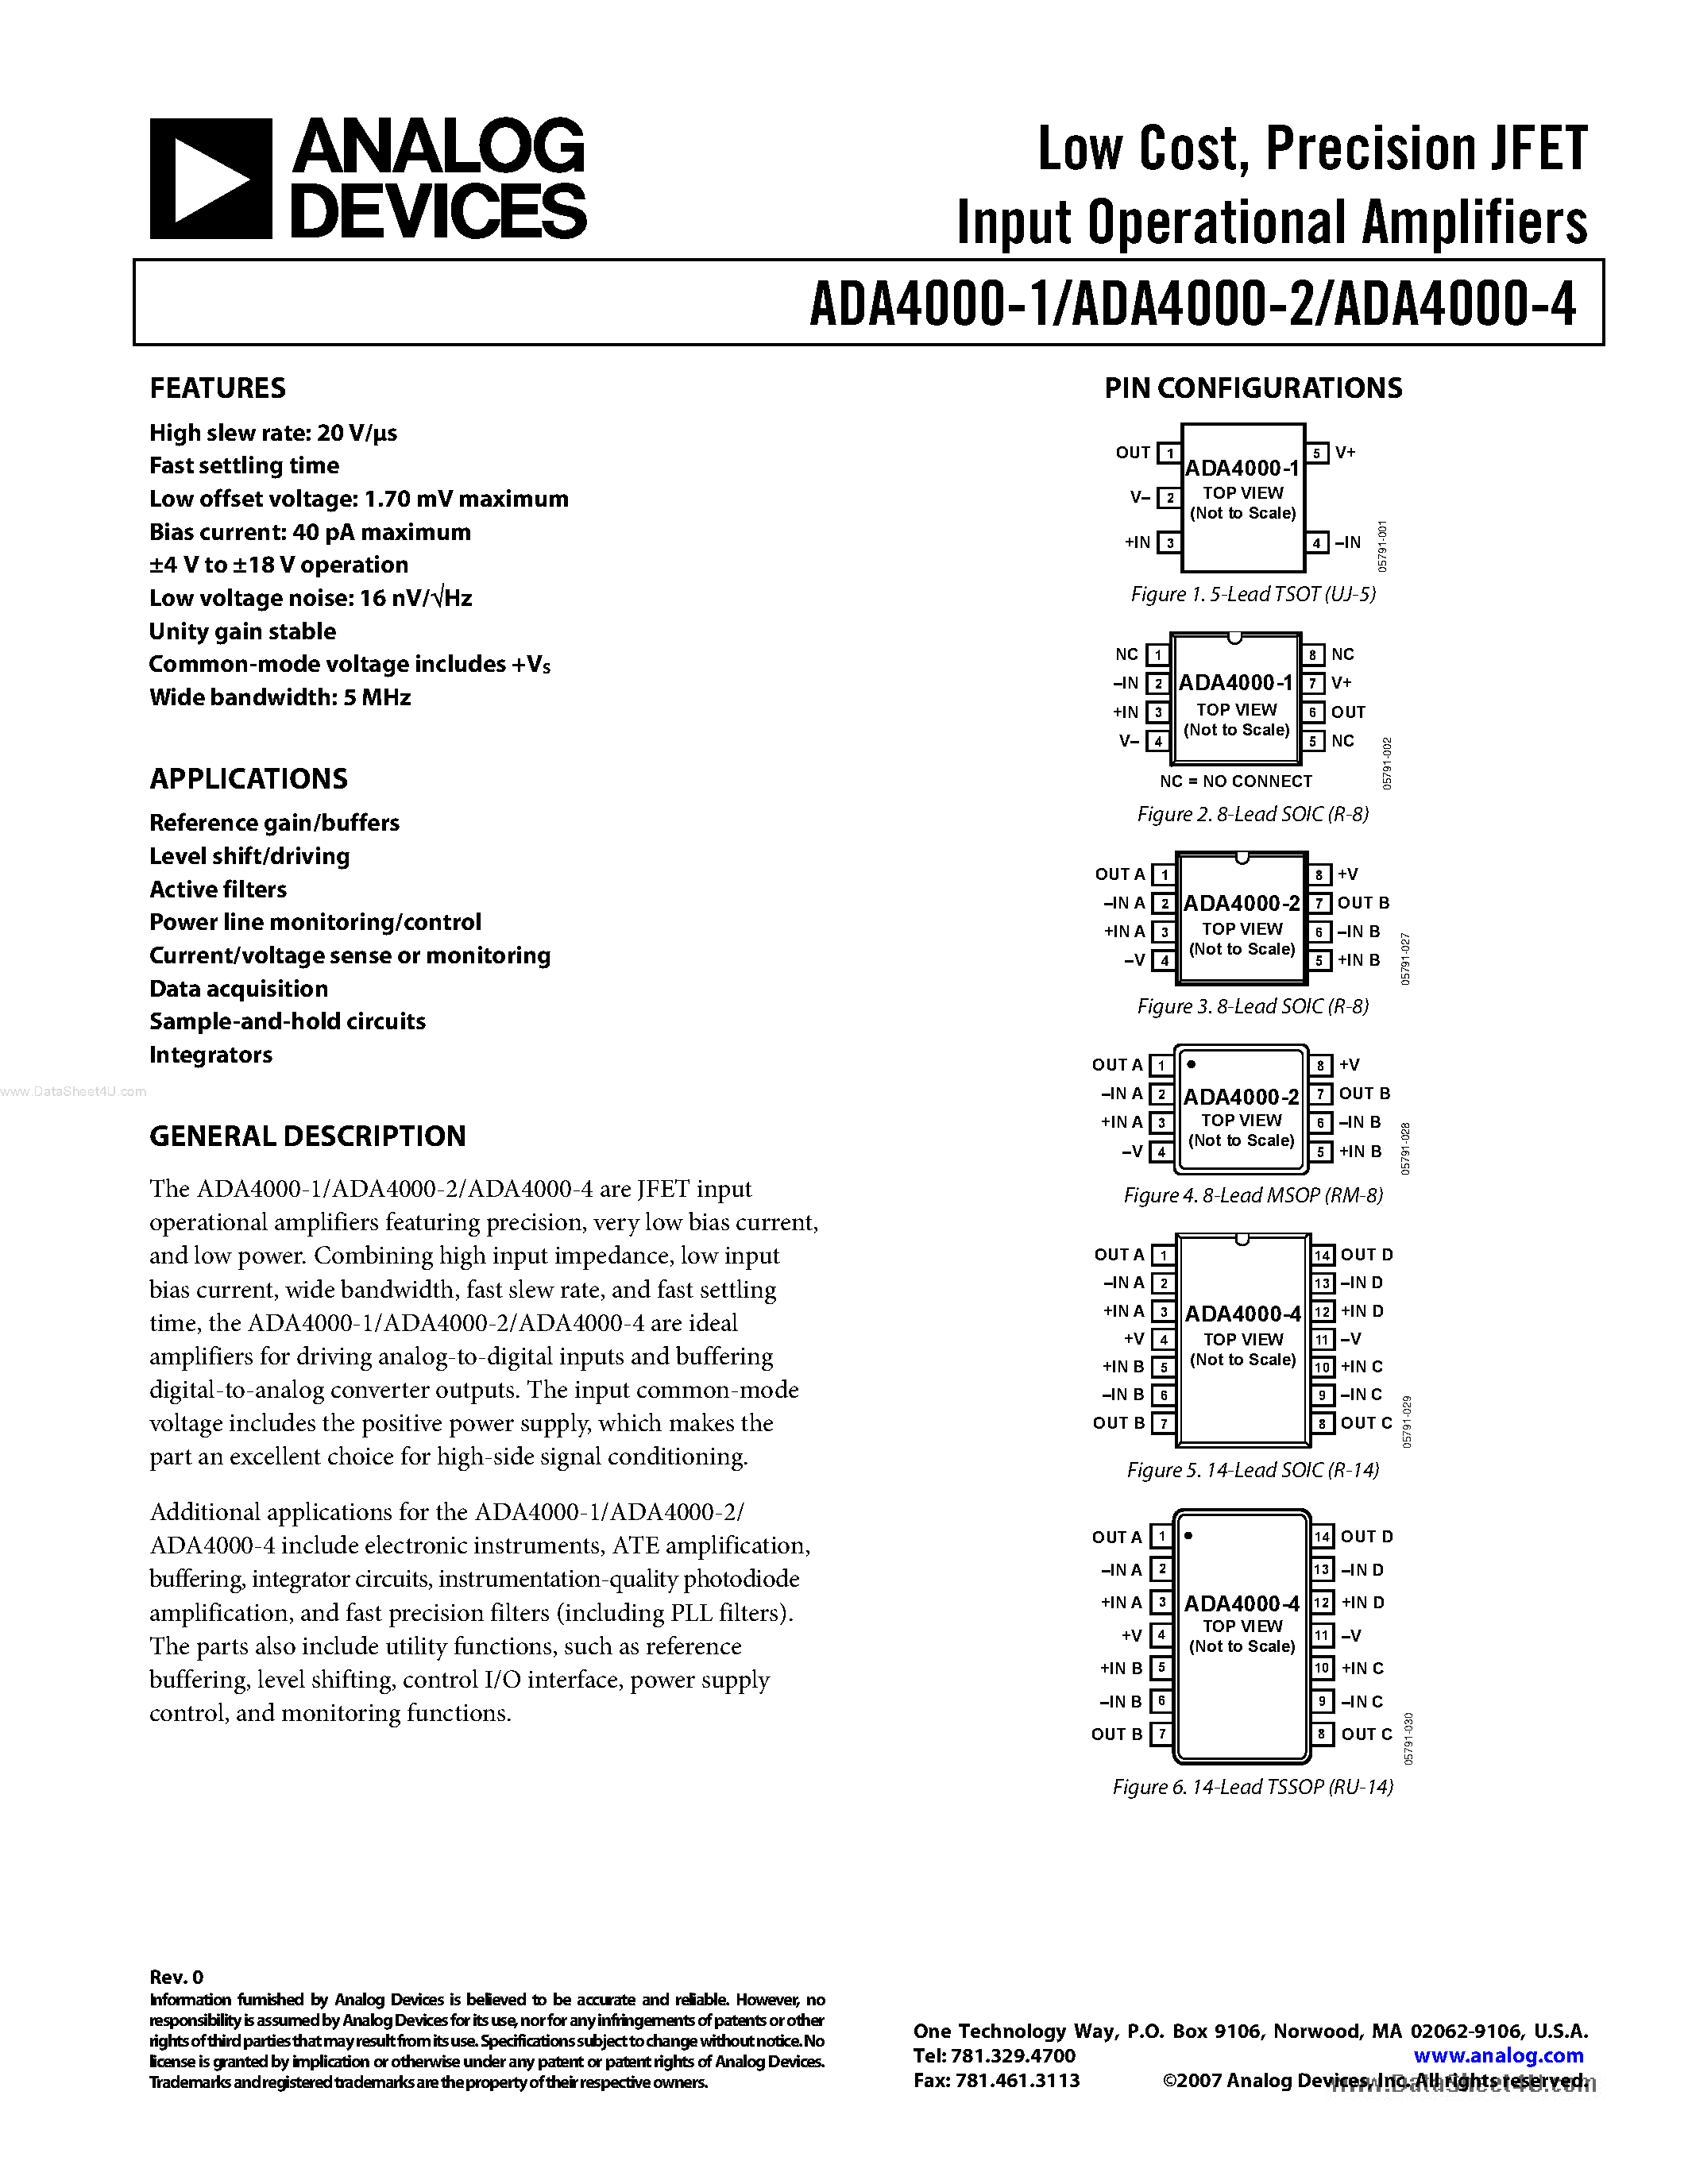 Даташит ADA4000-1 - (ADA4000-1/-2/-4) Low Cost Precision JFET Input Operational Amplifiers страница 1